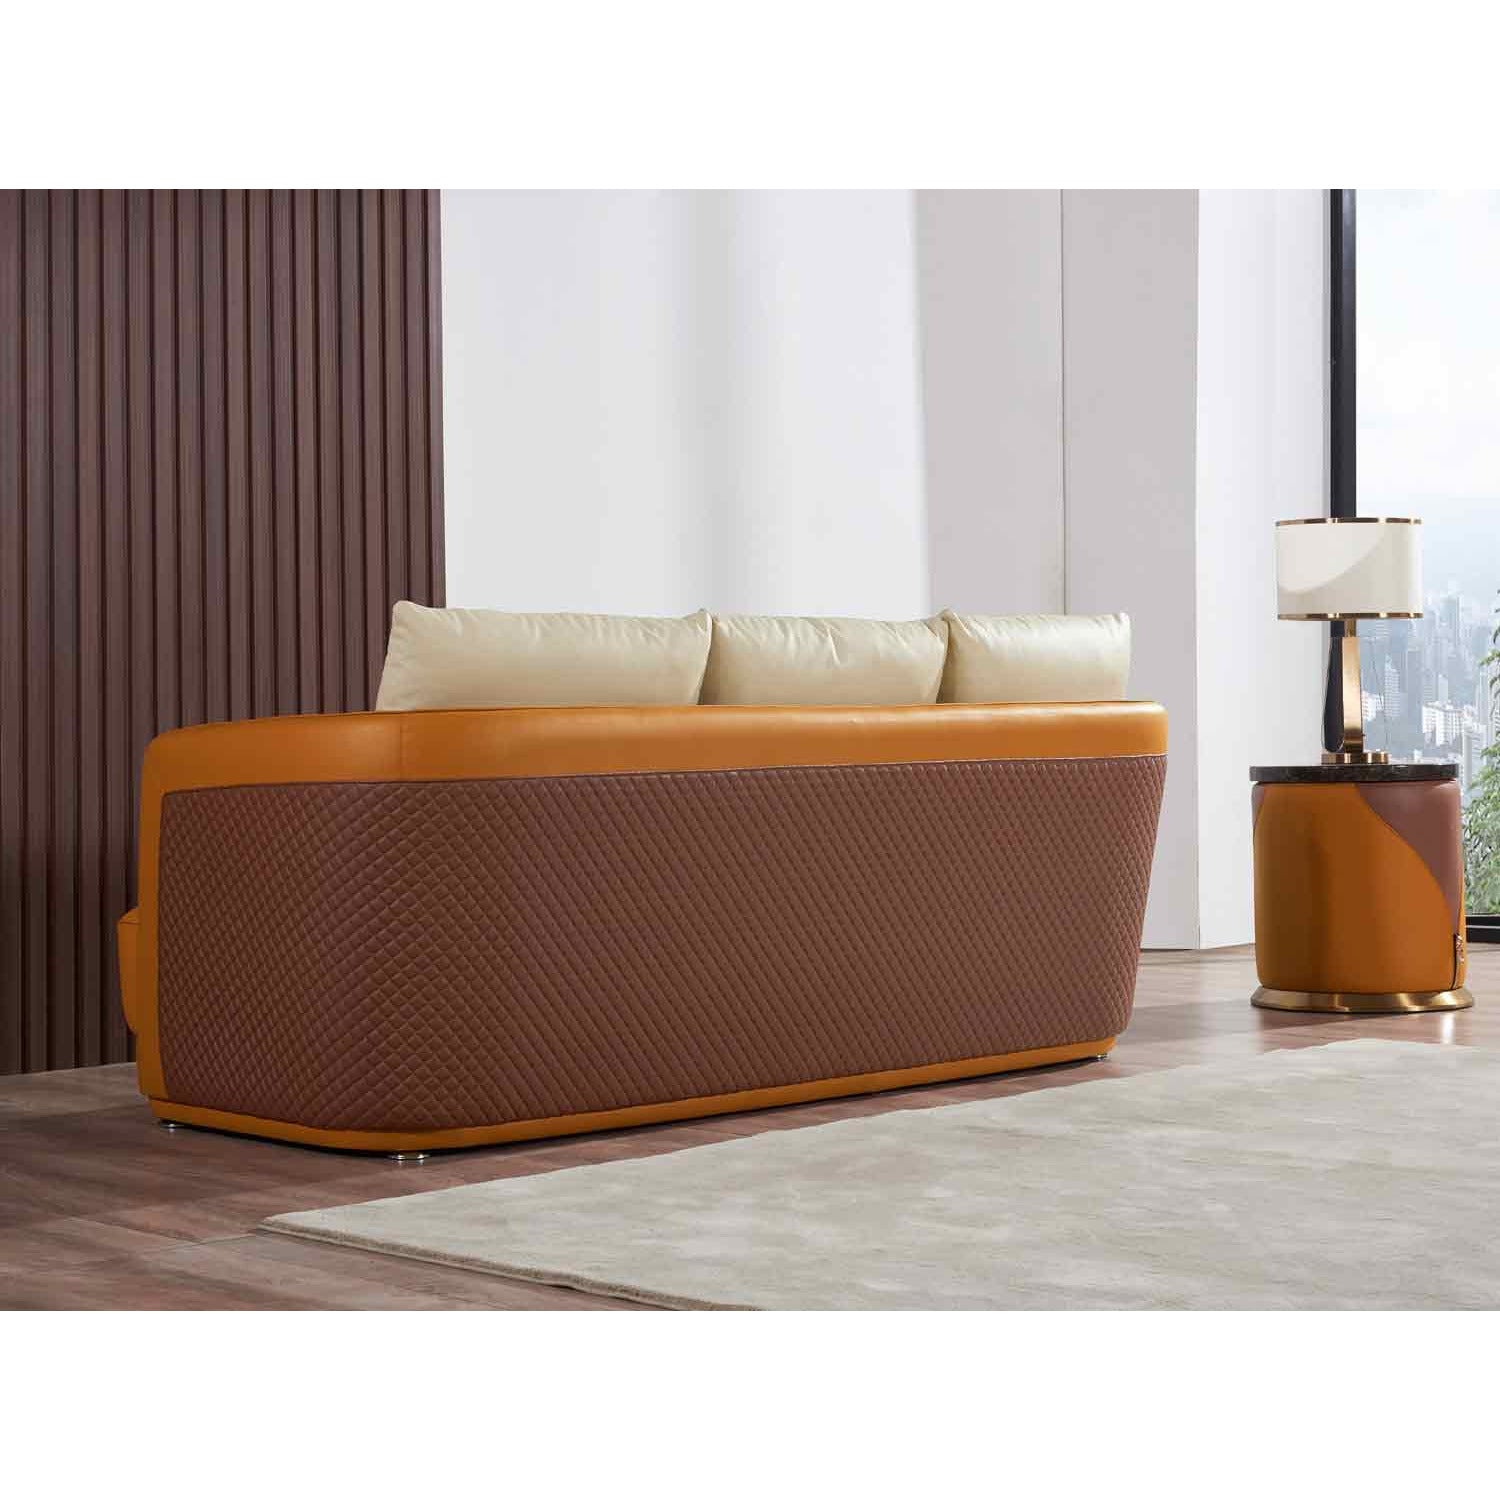 European Furniture - Glamour 2 Piece Living Room Set in Orange-Brown - 51619-2SET - New Star Living